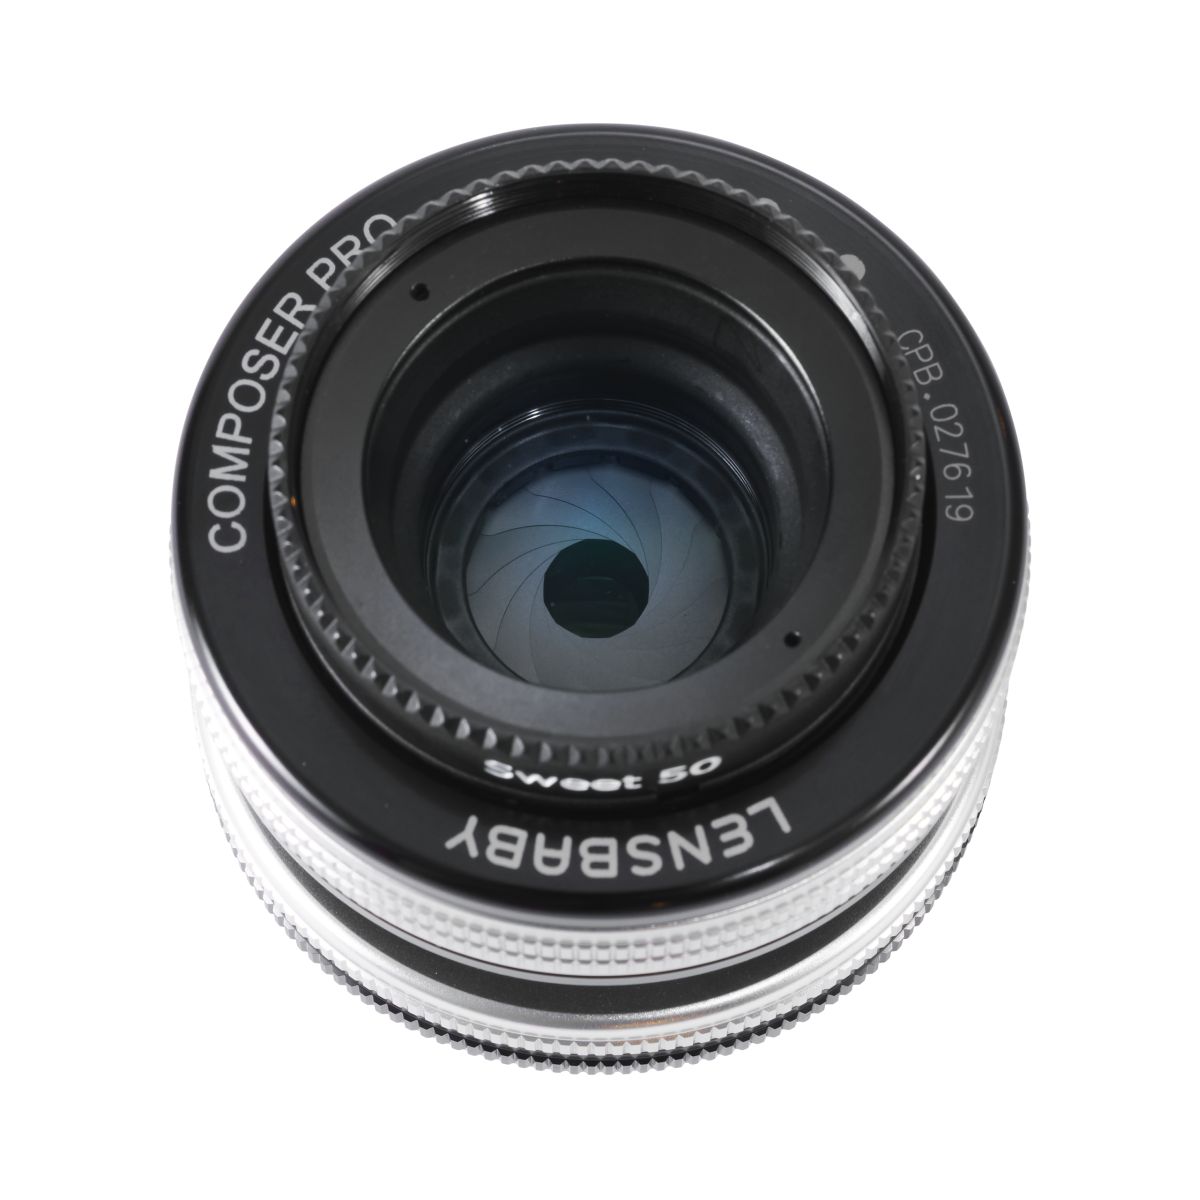 Lensbaby Composer Pro II + Sweet 50 Nikon F